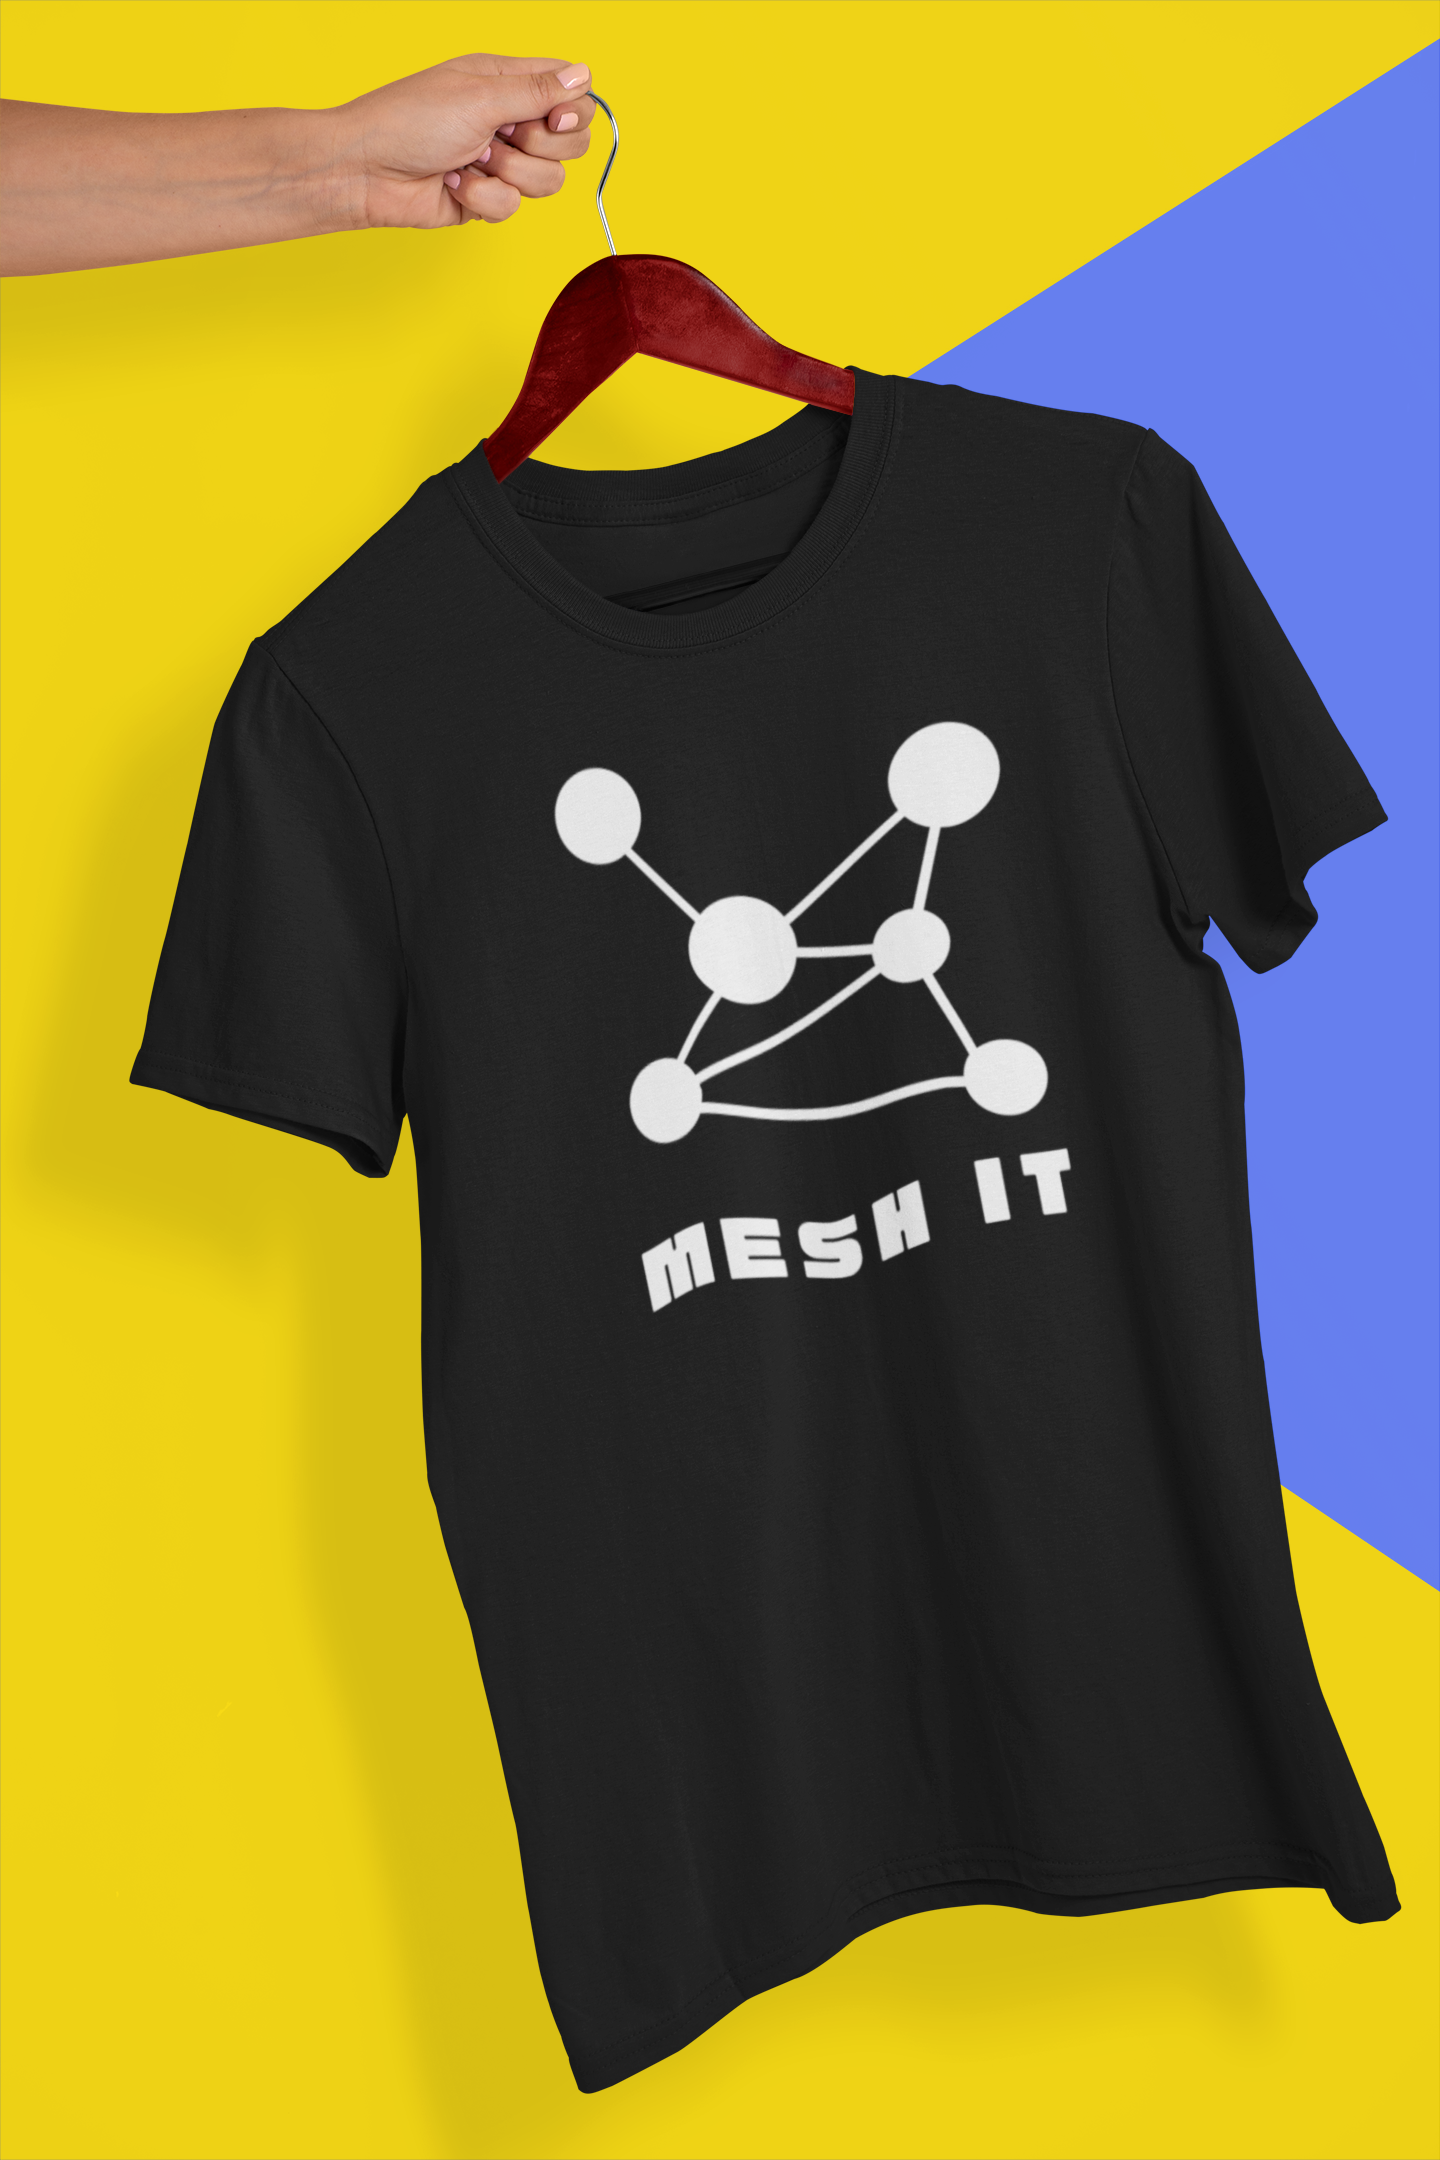 Mesh it - Developer T-Shirt